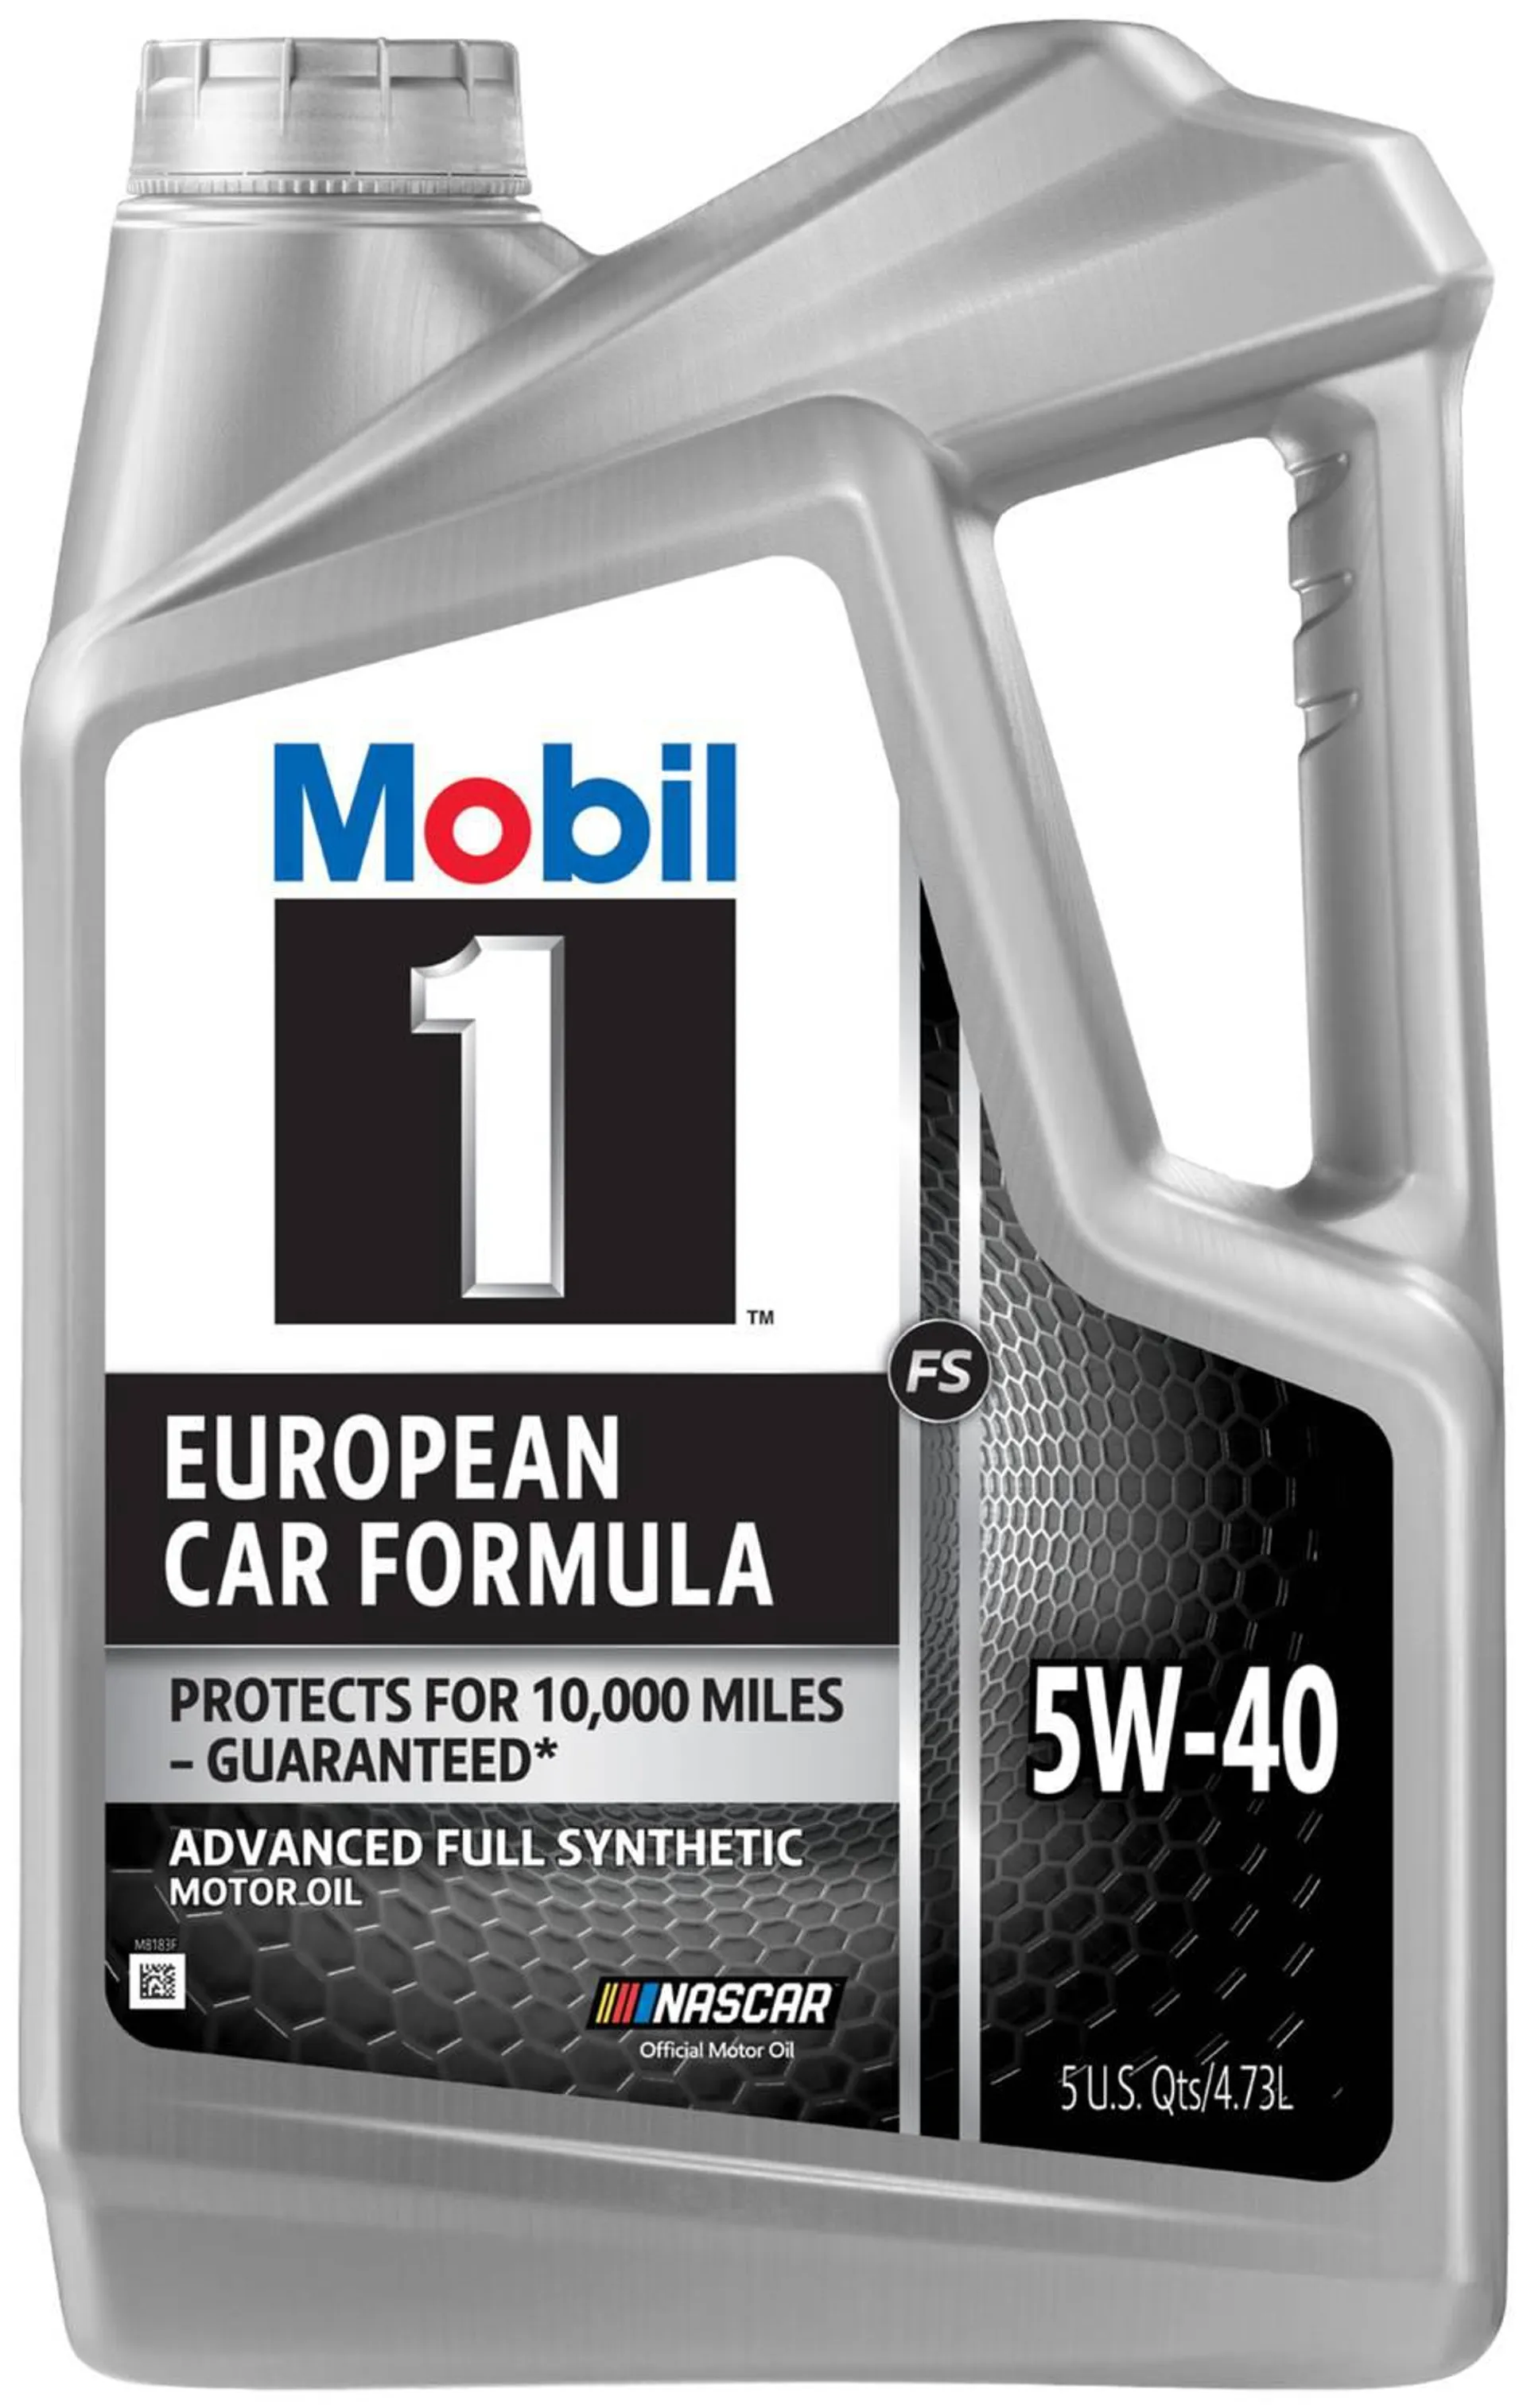 Mobil 1 Advanced Full Synthetic Motor Oil 5W-40 5 Quart - 1-5-40-5QT